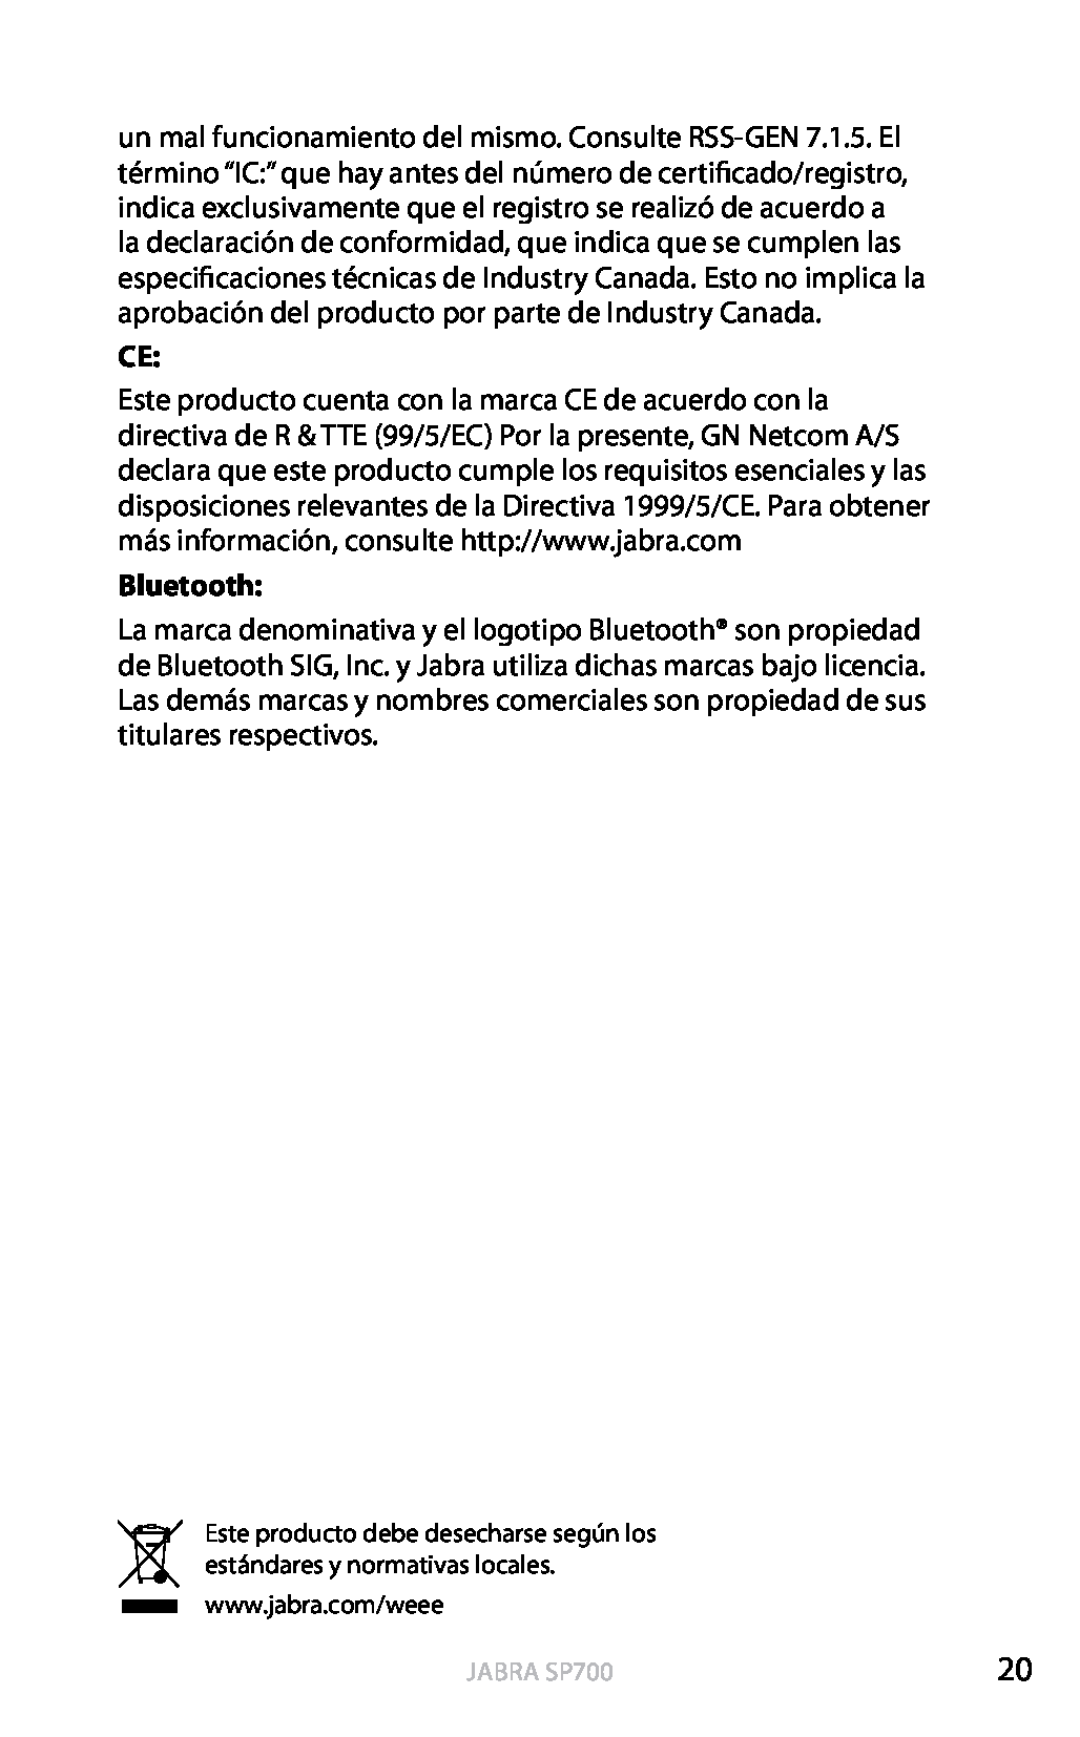 Jabra user manual Español, Bluetooth, Jabra SP700 